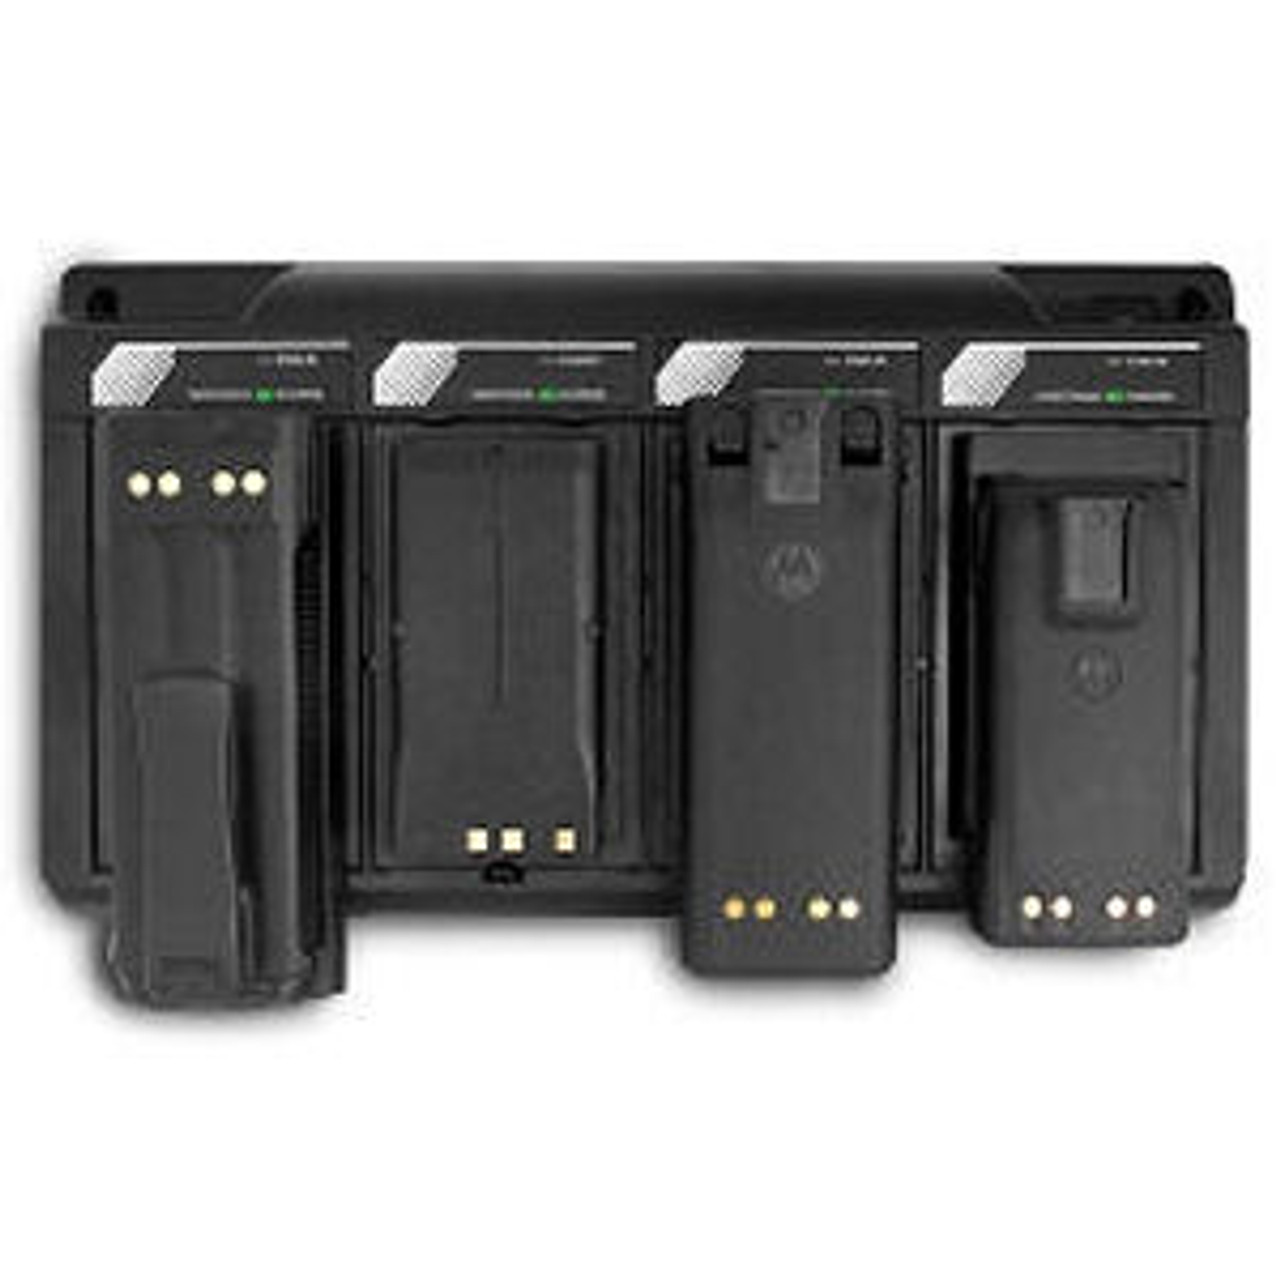 AdvanceTec 4-Slot Conditioning Charger For Motorola GP328 Nickel Batteries